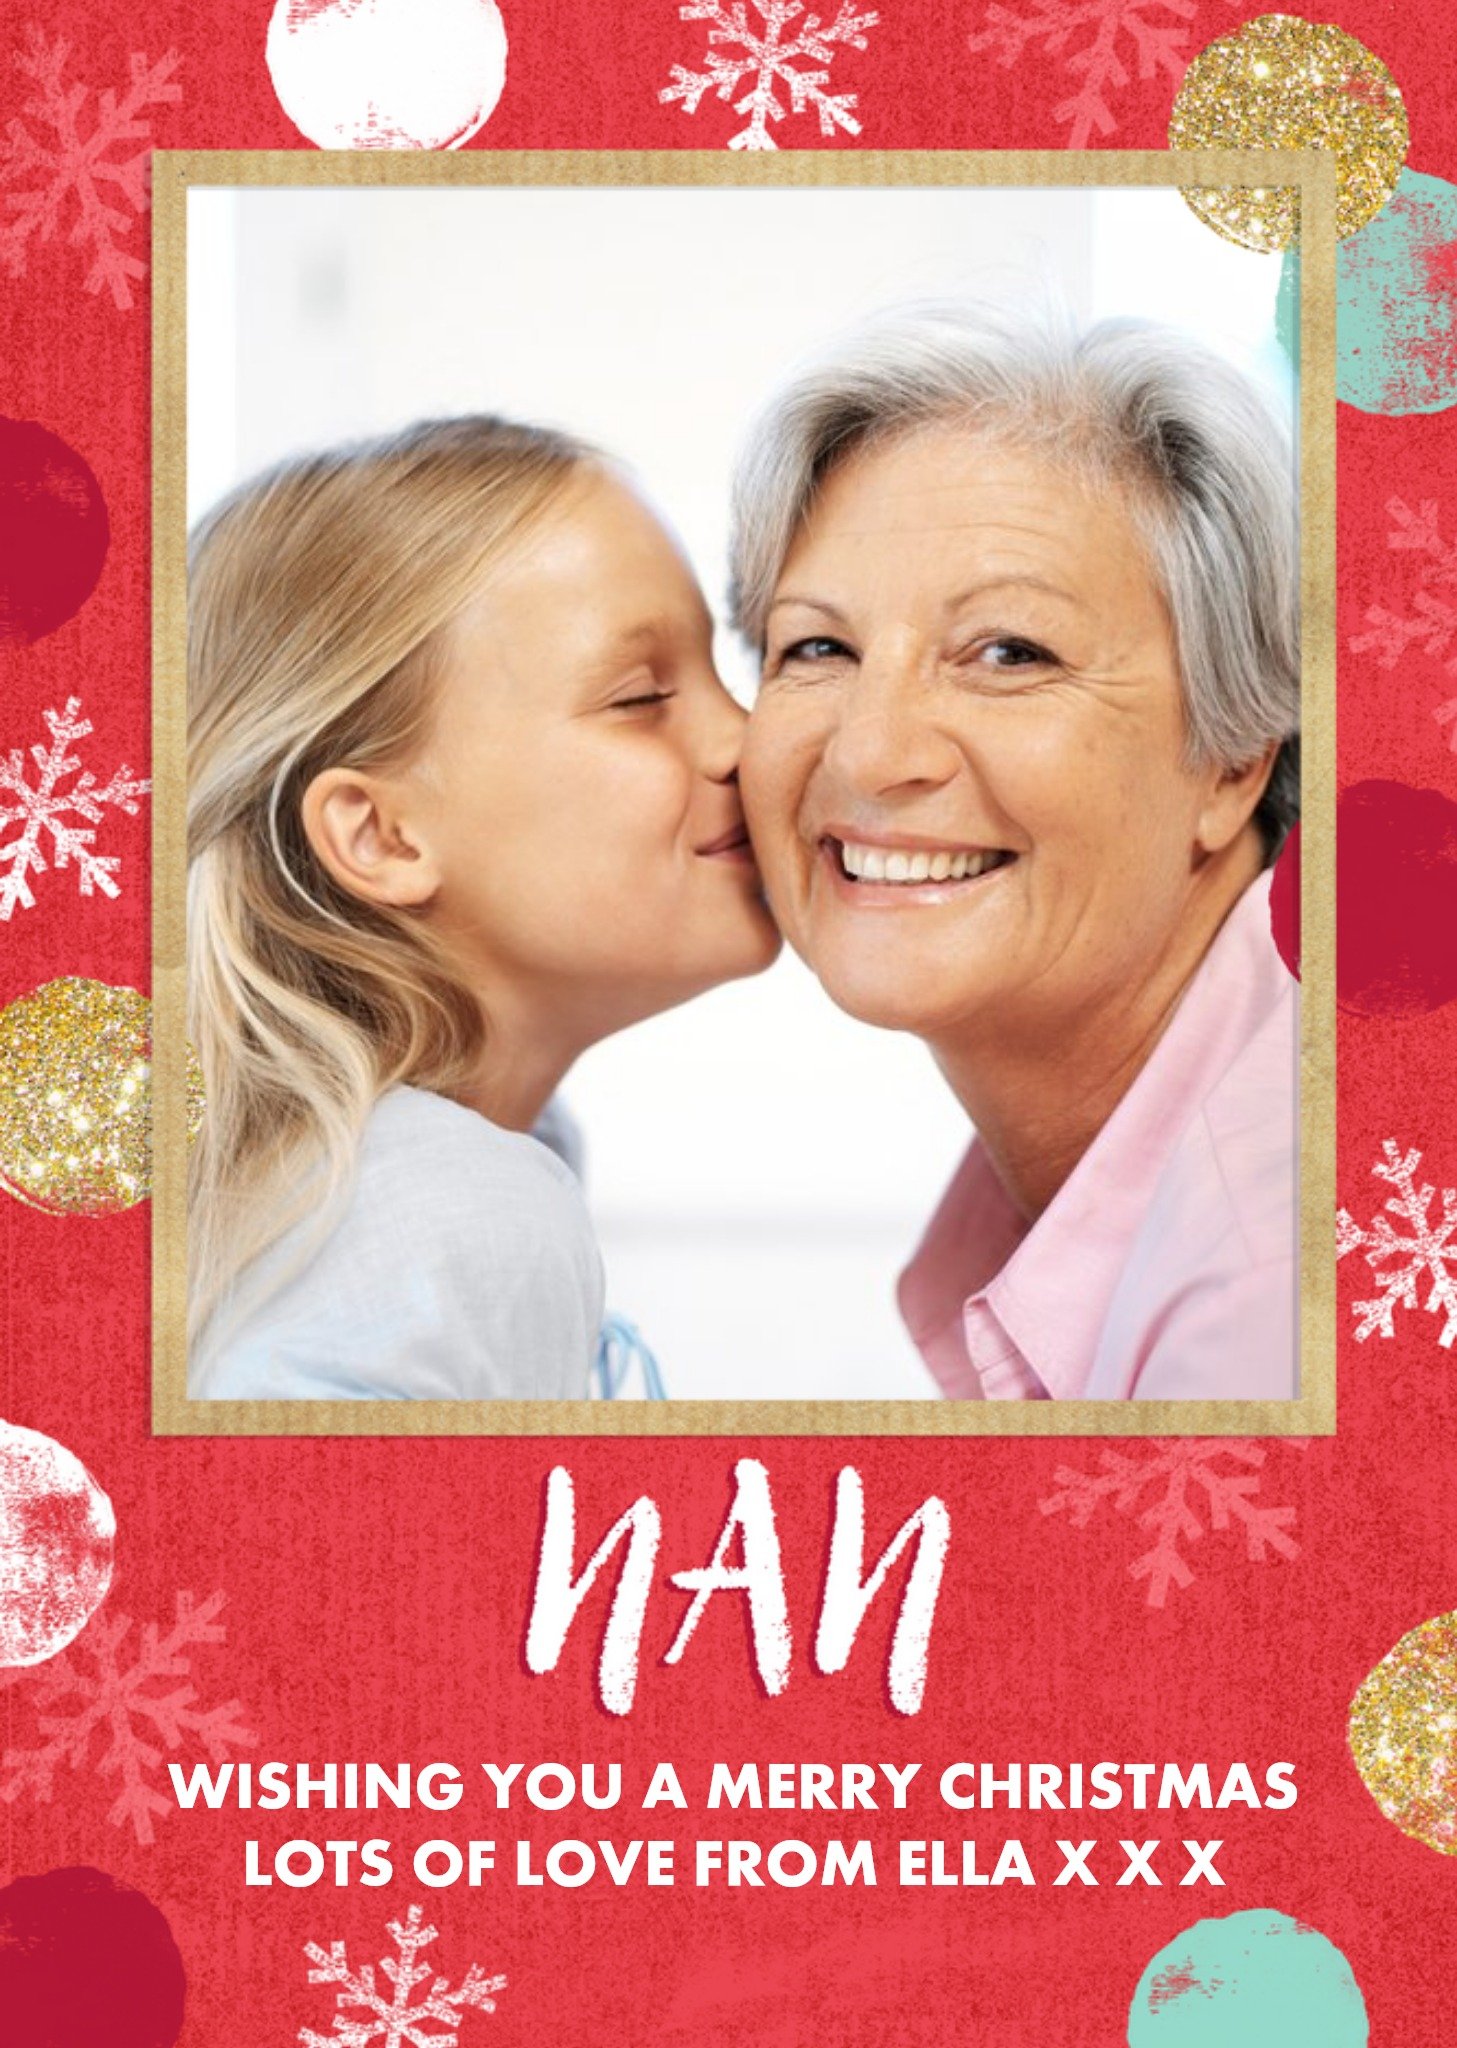 Moonpig Wrapped Up Photo Upload Christmas Card Nan Wishing You A Merry Christmas Ecard